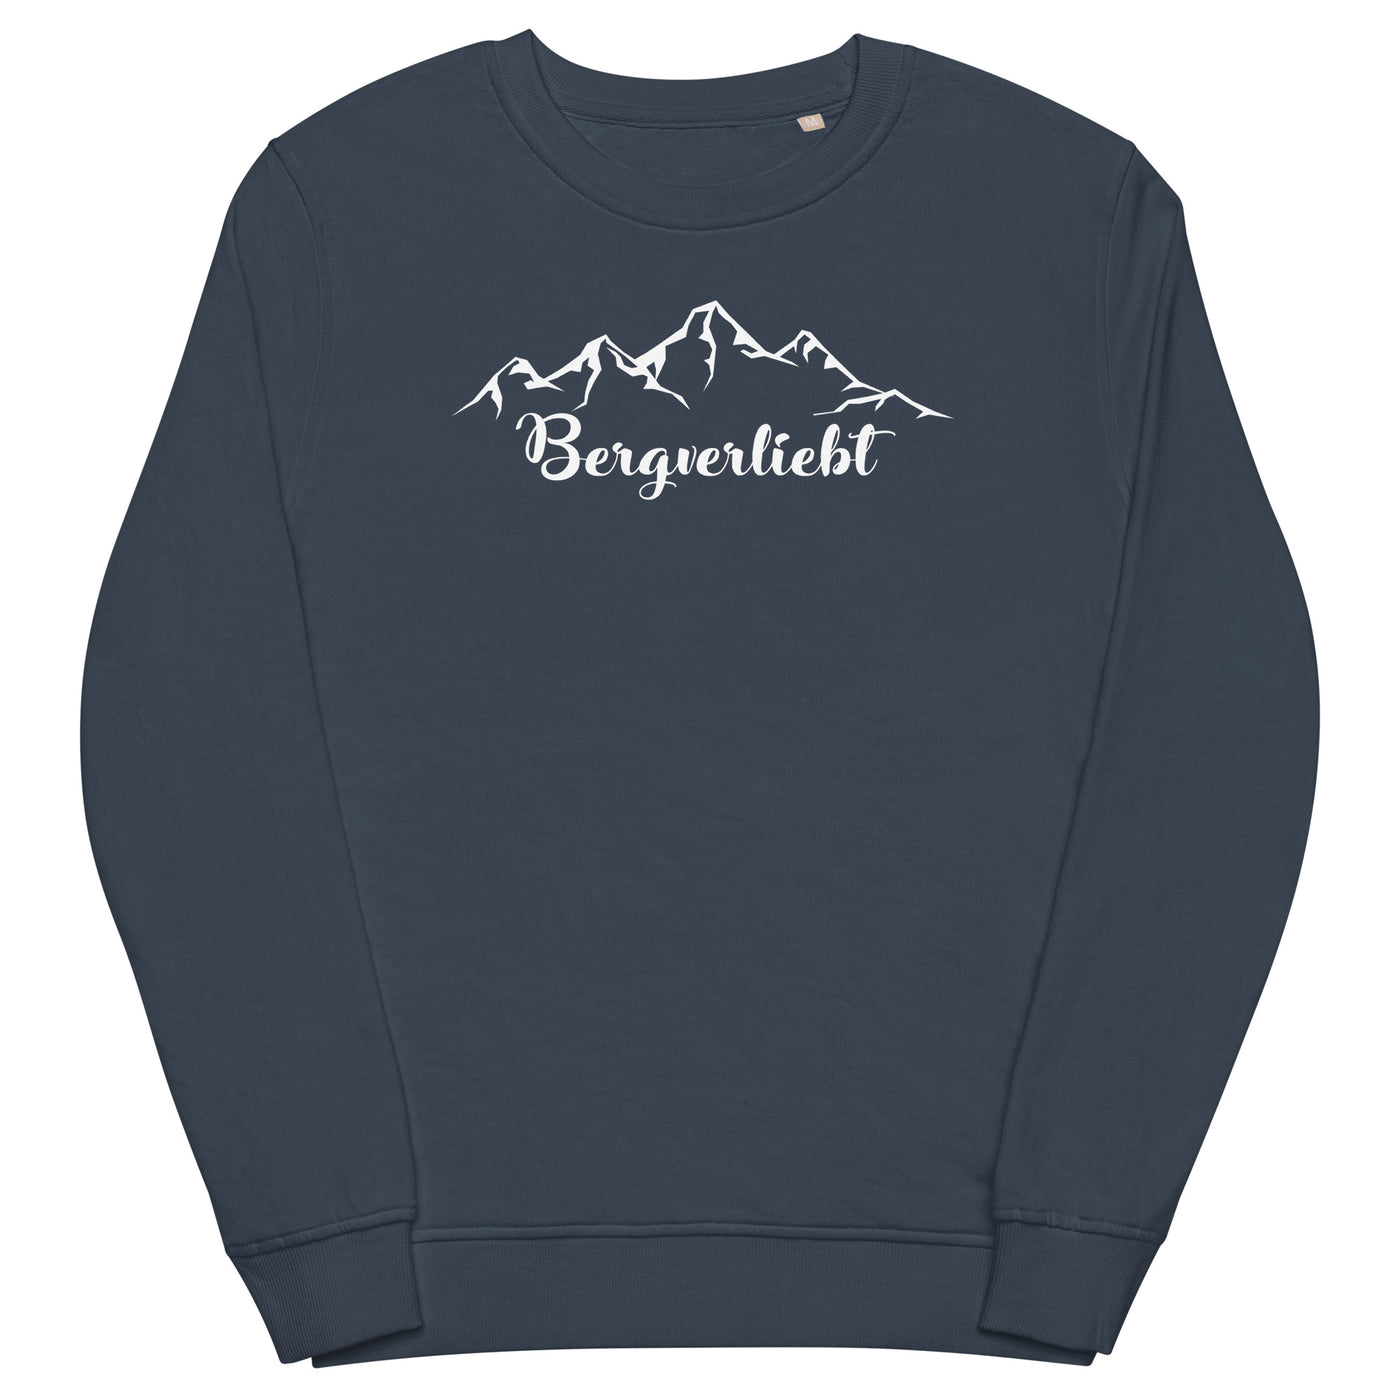 Bergverliebt (13) - Unisex Premium Organic Sweatshirt berge Navyblau